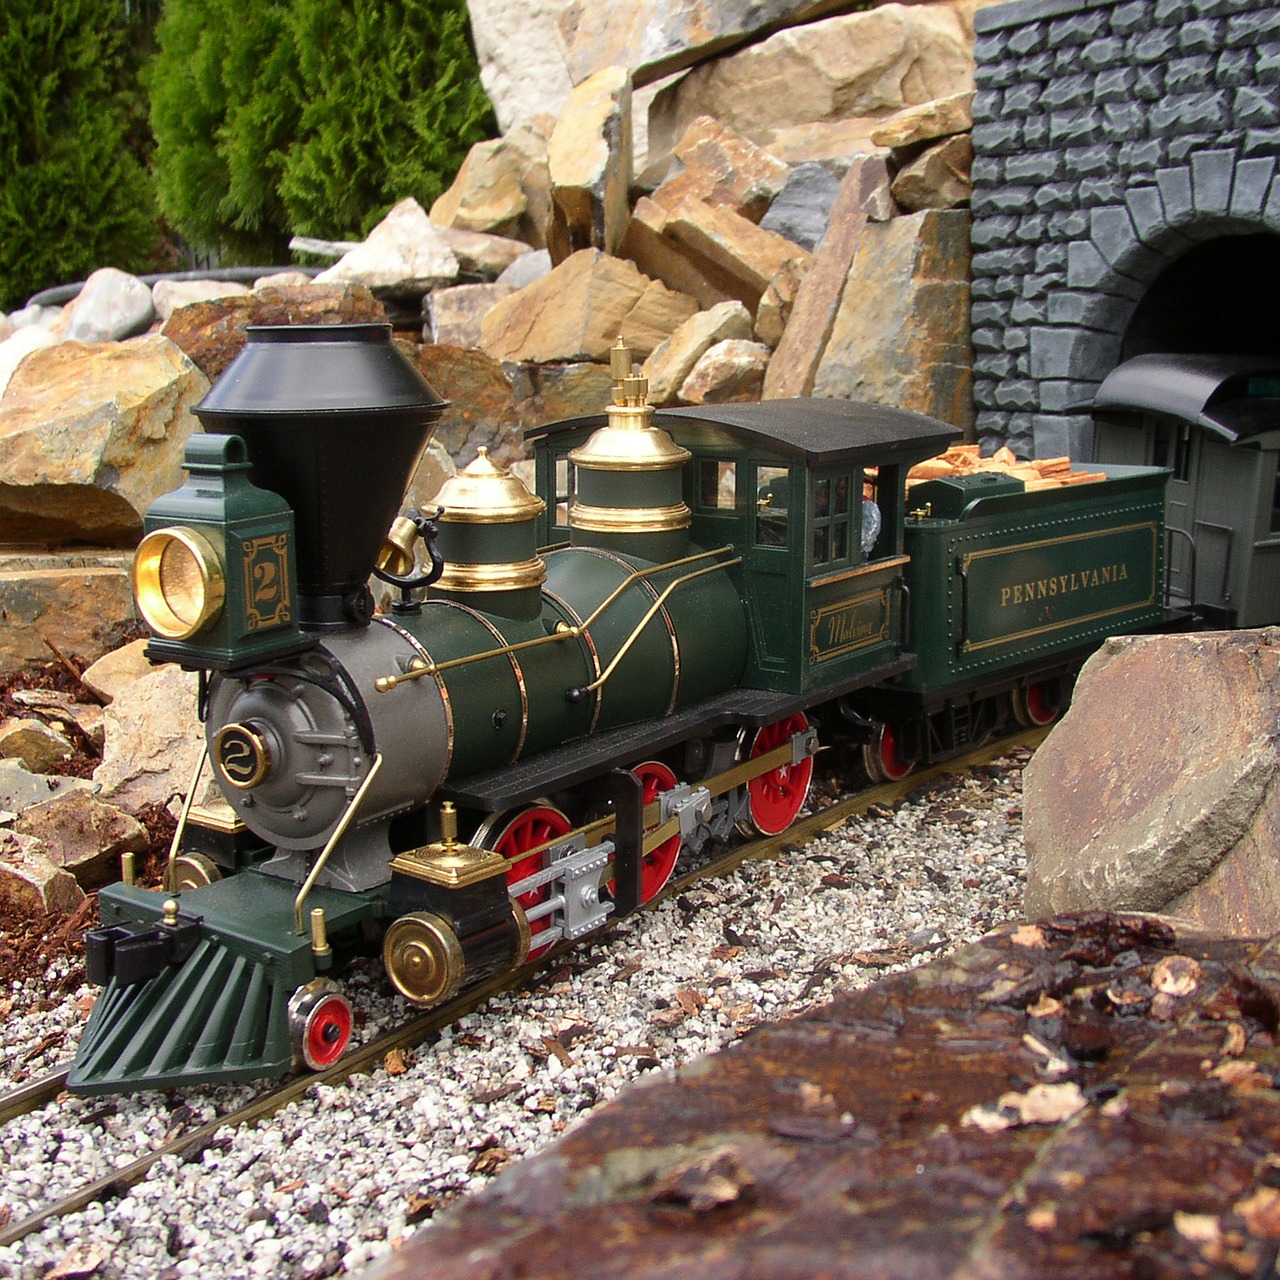 garden trains miniature model railway free photo